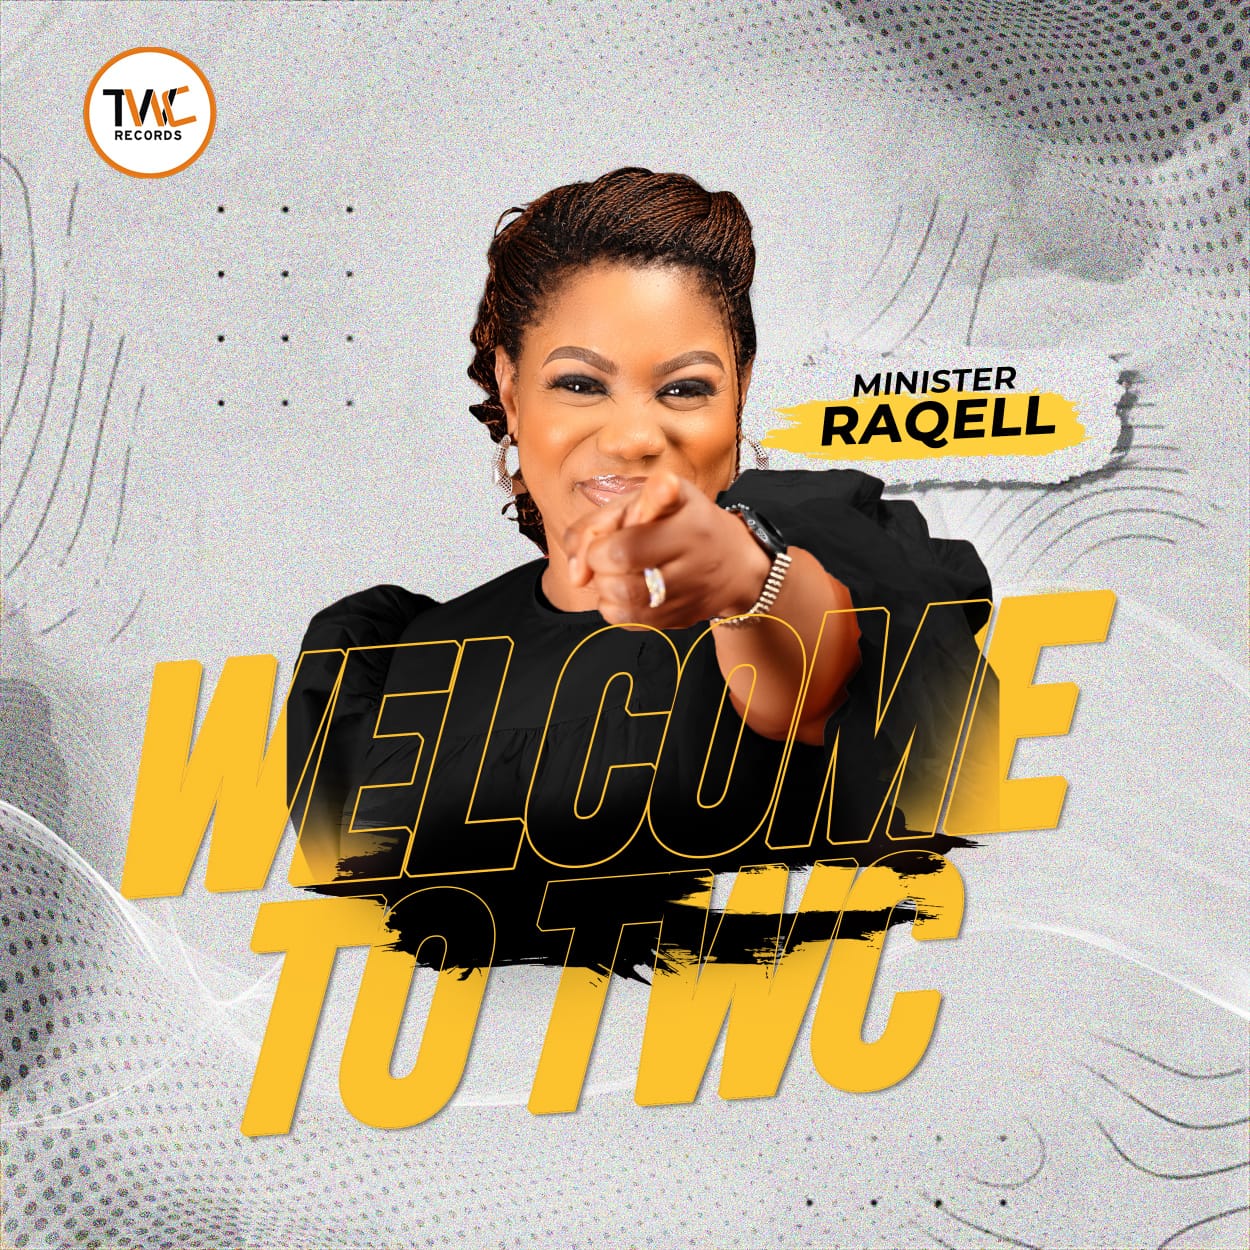 TWC Records Unveils Abuja Based Gospel Artist, Minister Raqell